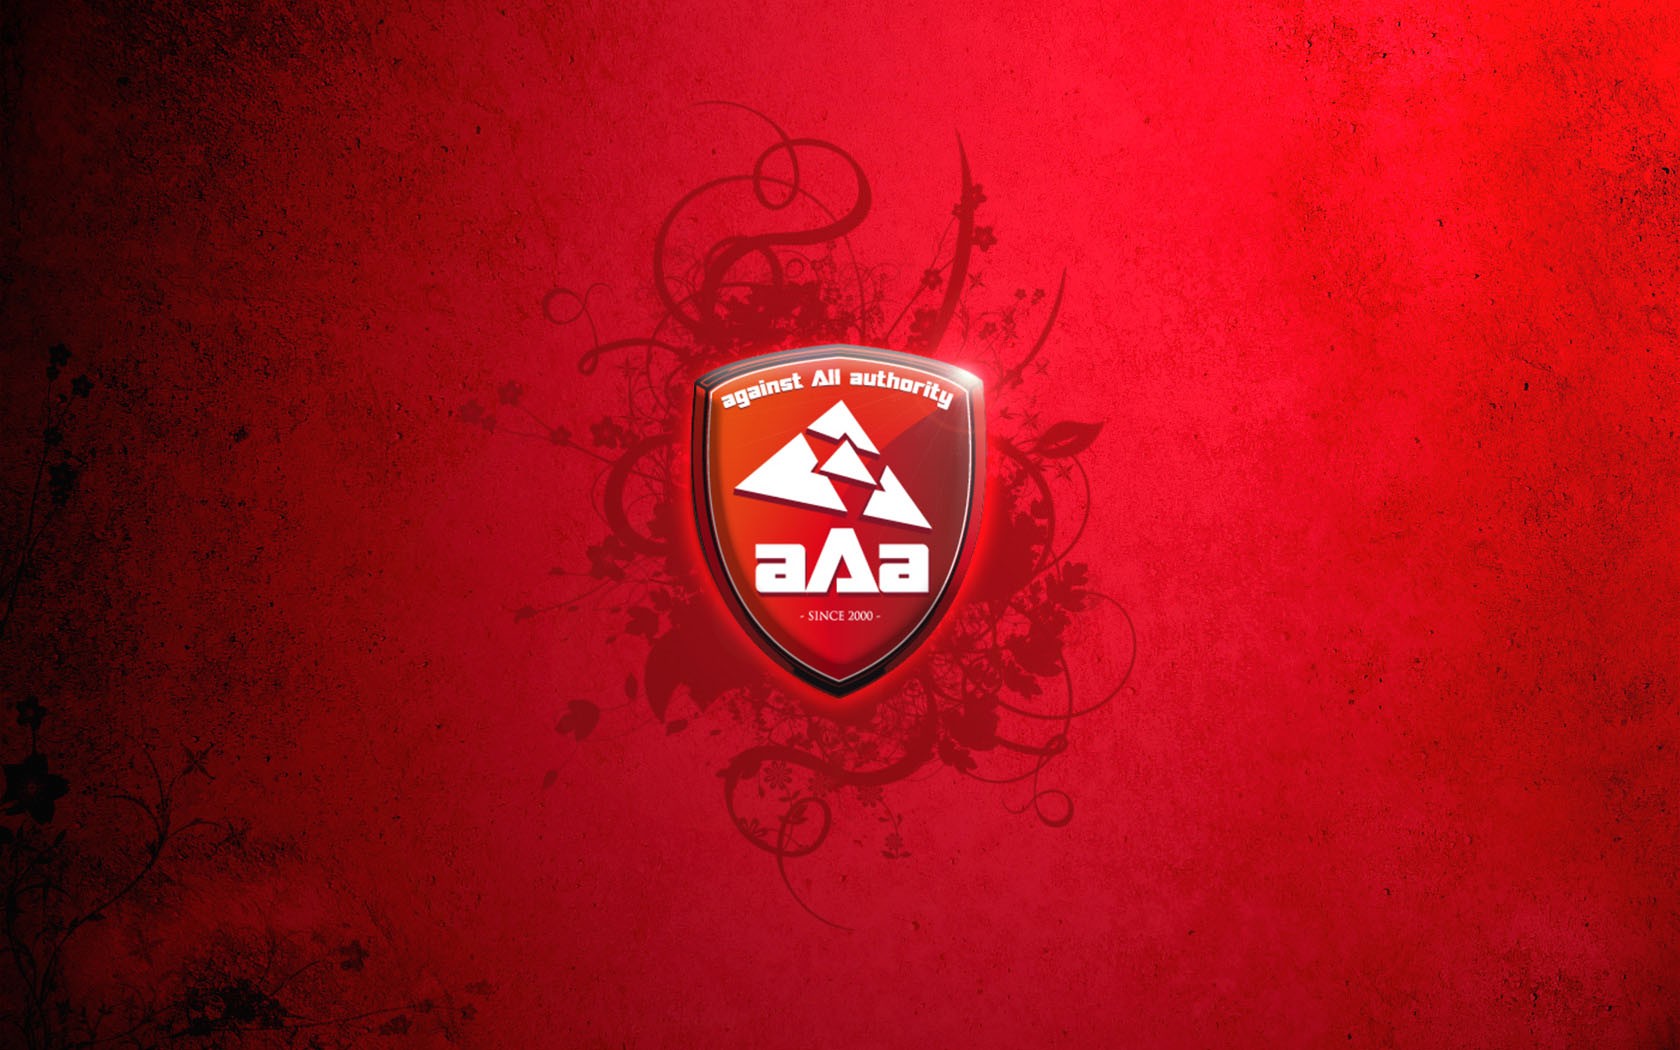 General 1680x1050 red background triangle logo digital art